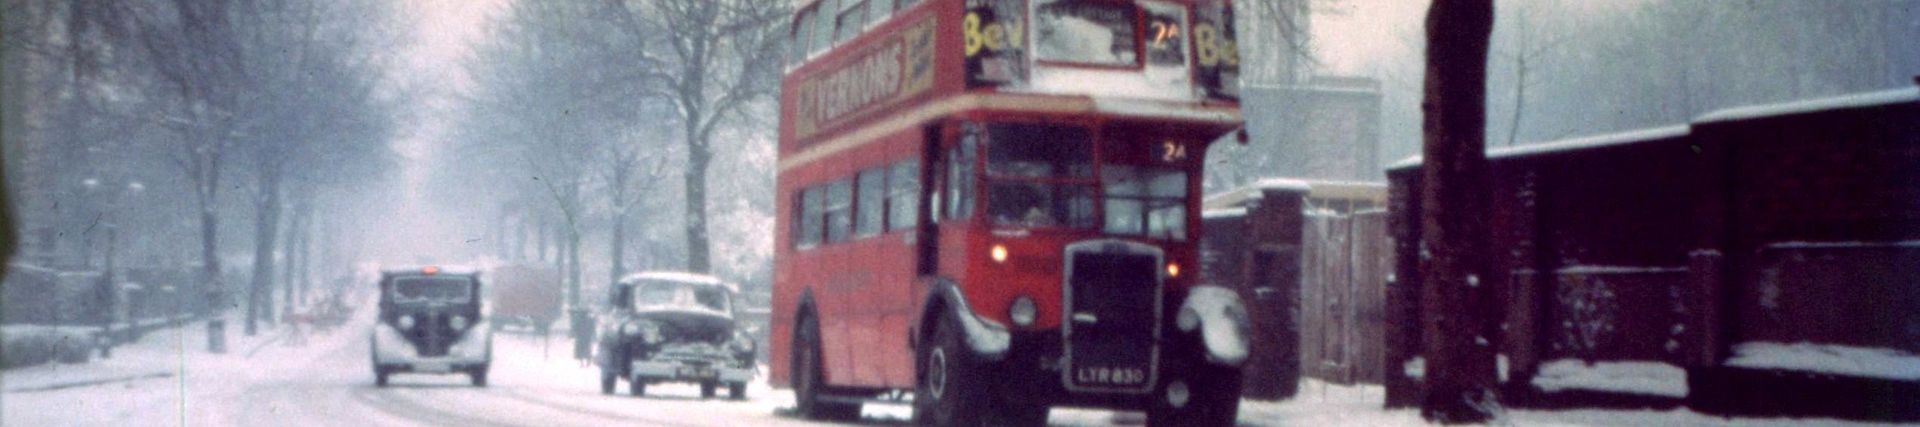  A bus driving through snow, London Transport, circa 1970